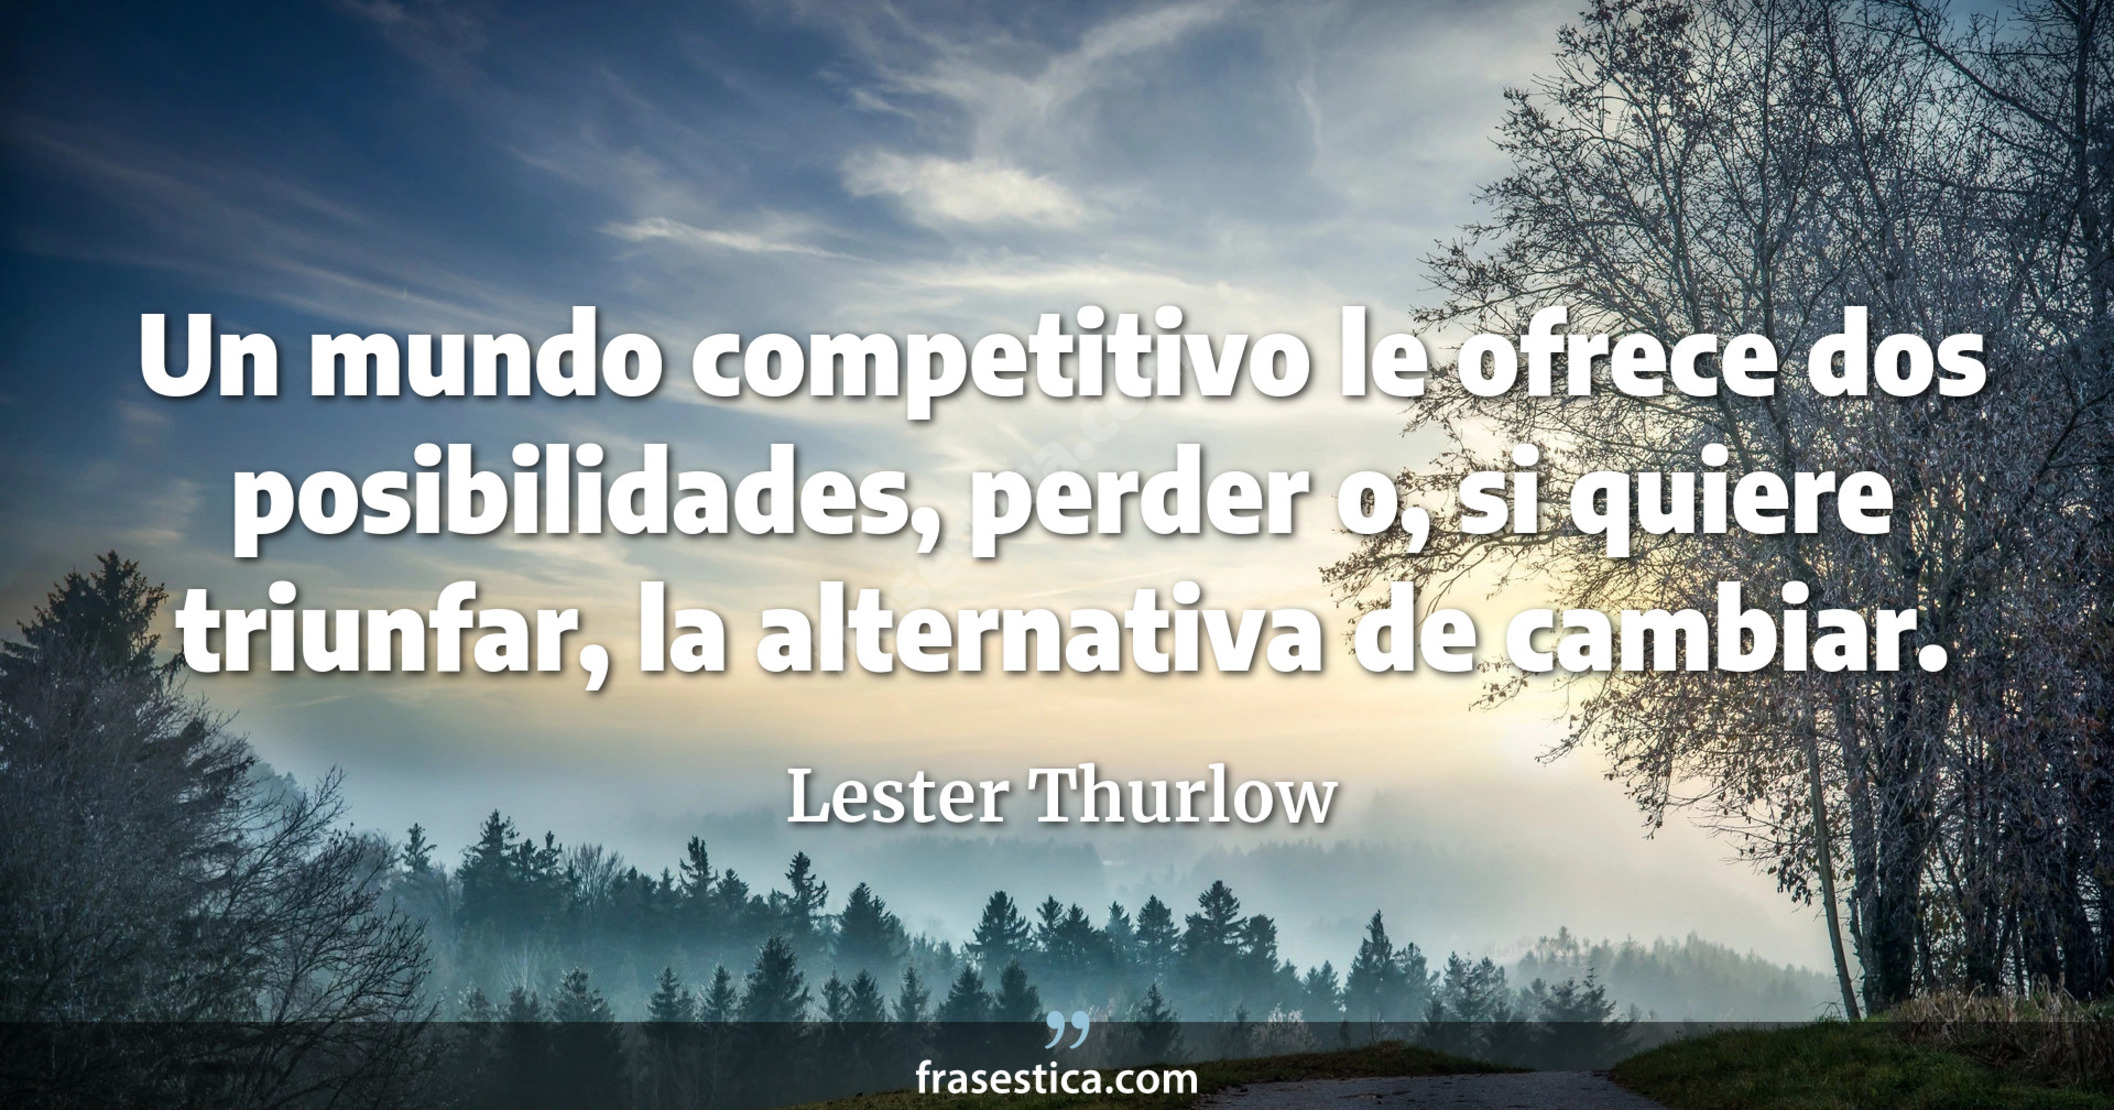 Un mundo competitivo le ofrece dos posibilidades, perder o, si quiere triunfar, la alternativa de cambiar. - Lester Thurlow